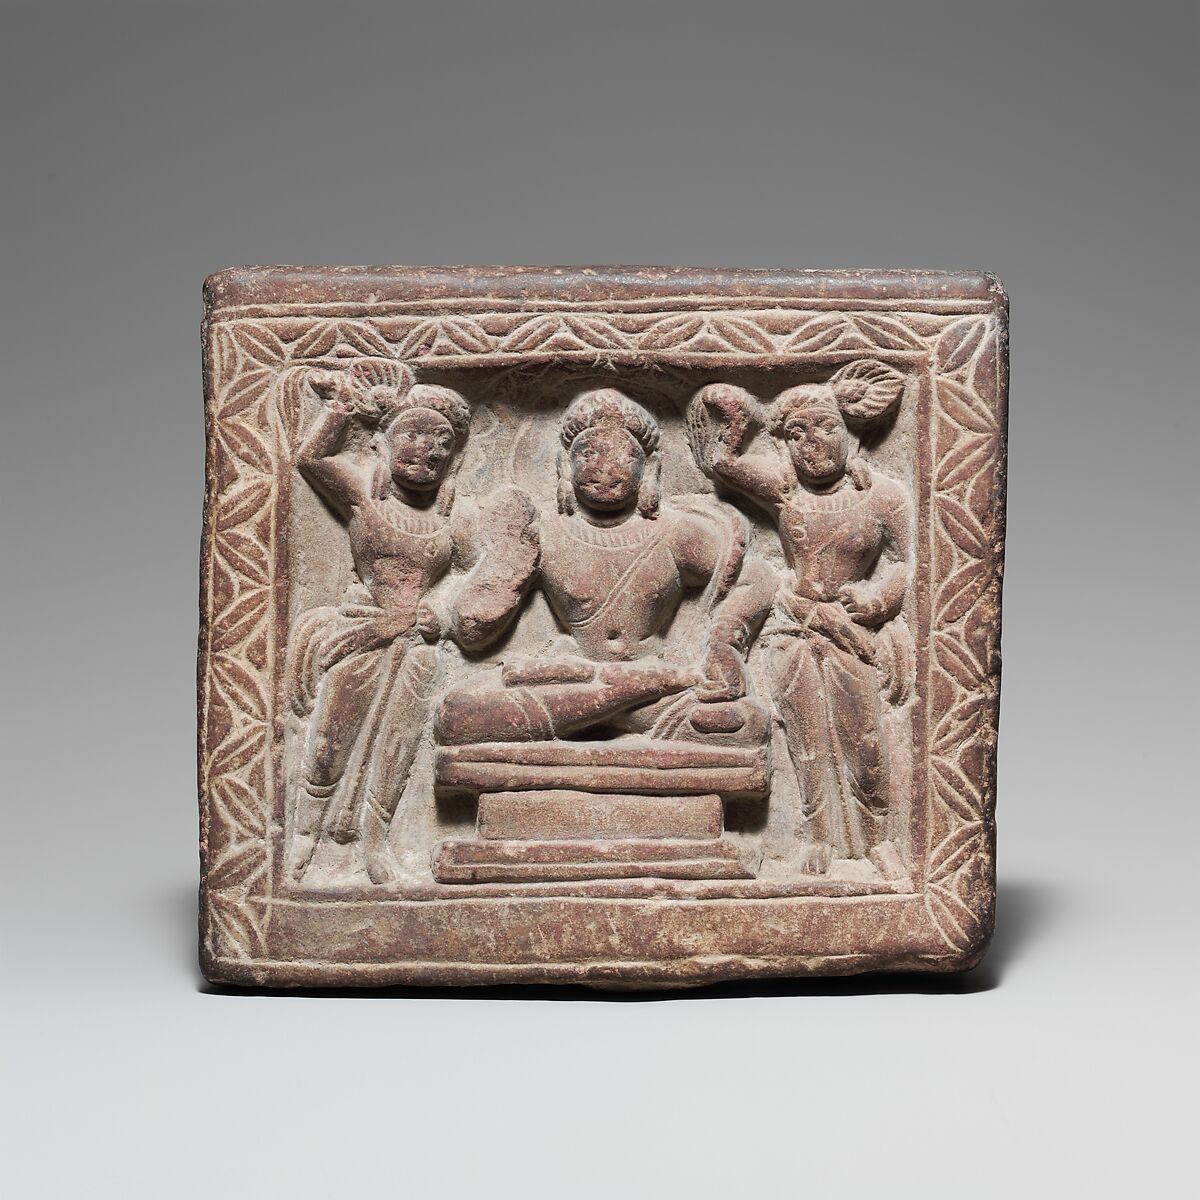 Bodhisattva and Attendants, Red stone, India (Uttar Pradesh, Mathura) 